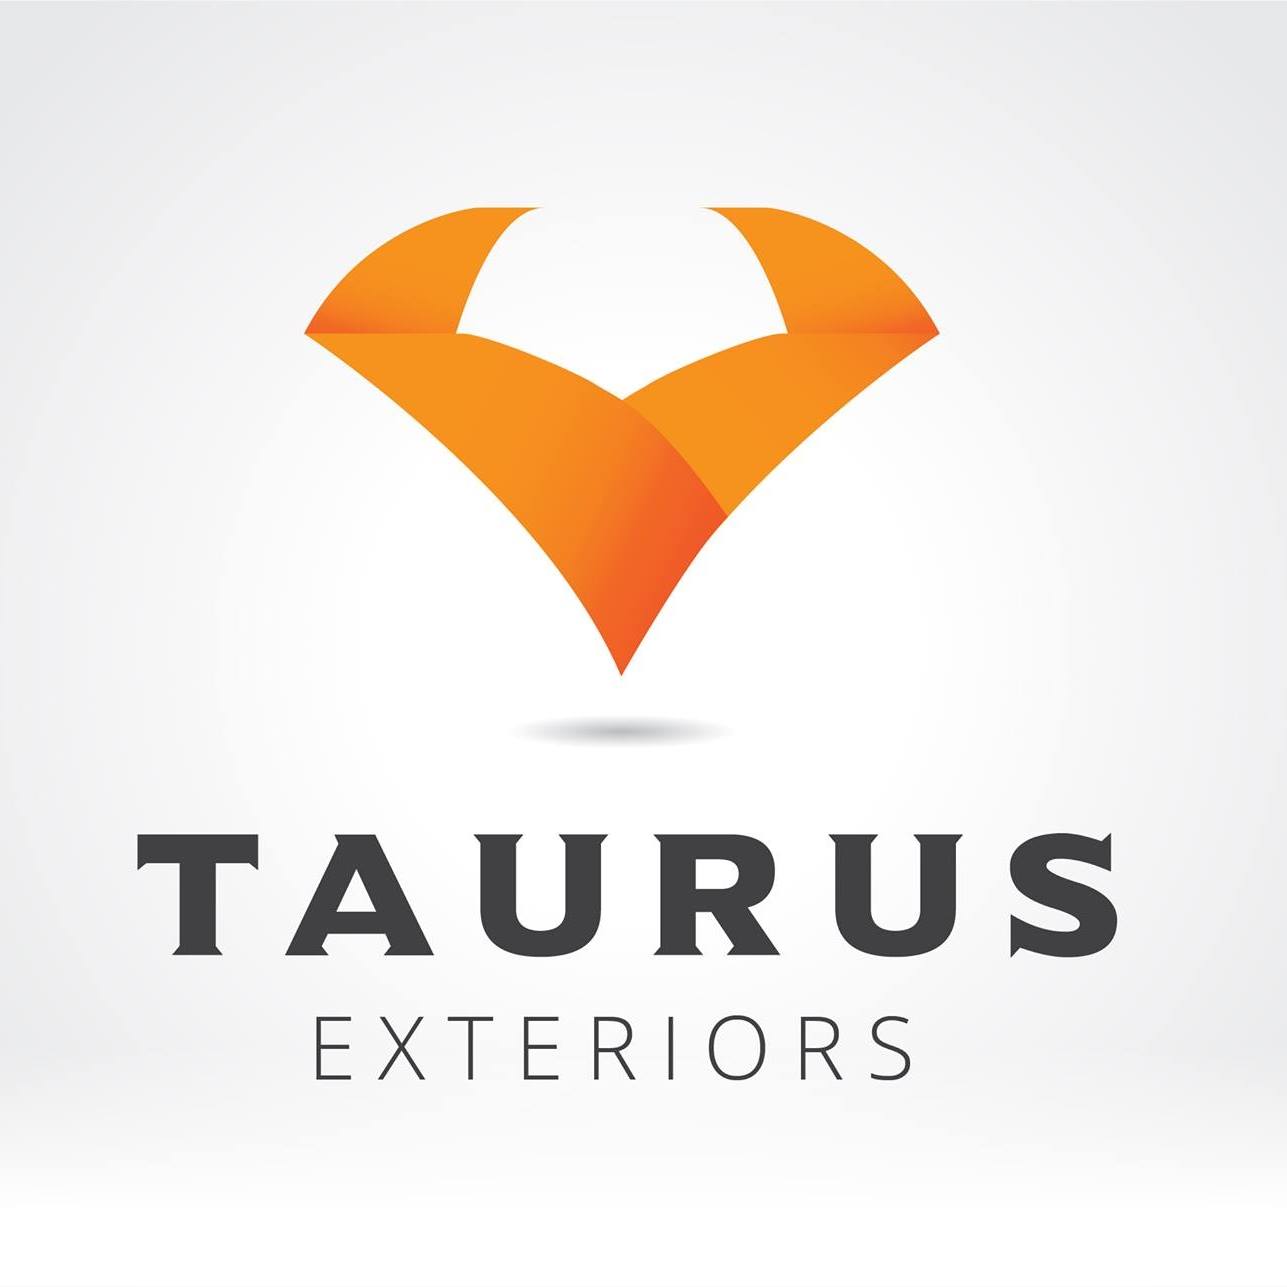 About Taurus Exteriors